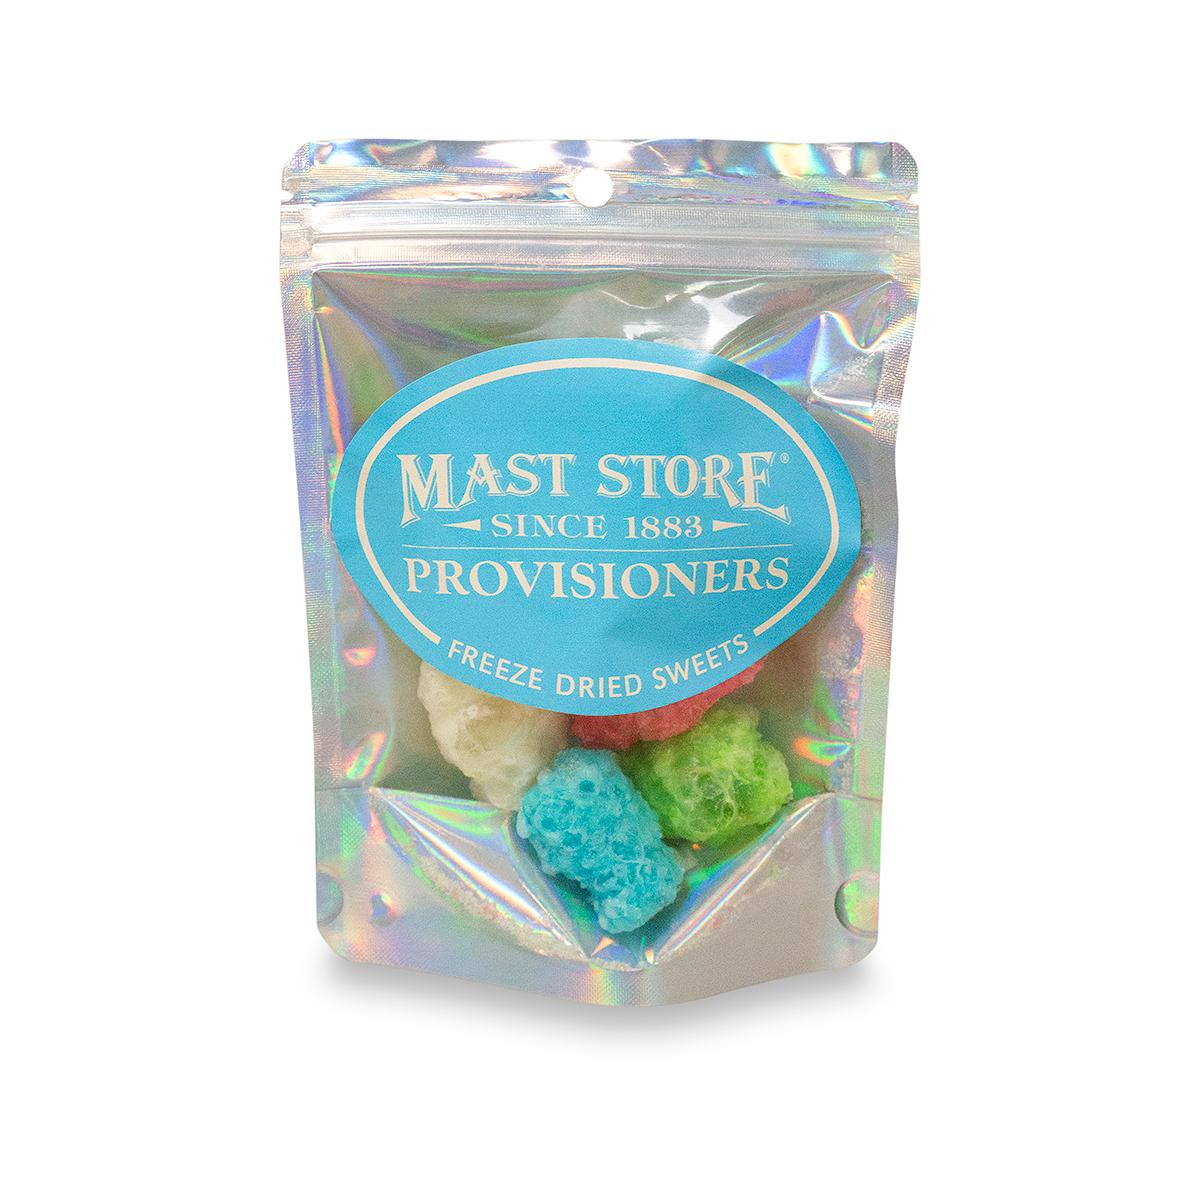  Mast Store Provisioners Freeze Dried Gummi Bear Candy